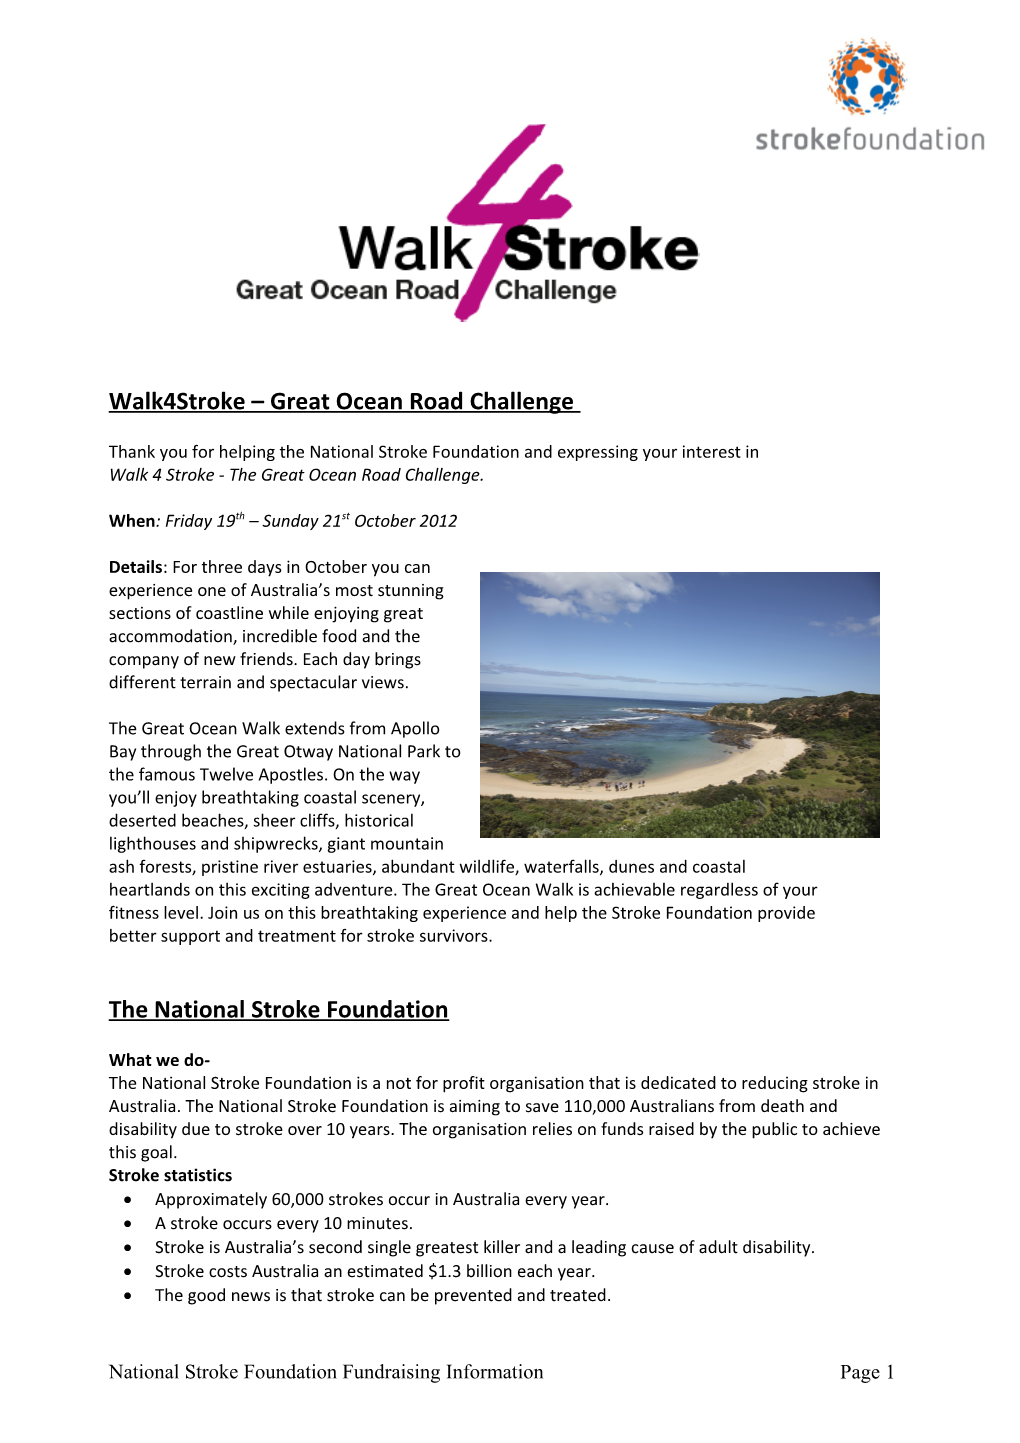 Walk4stroke Great Ocean Road Challenge